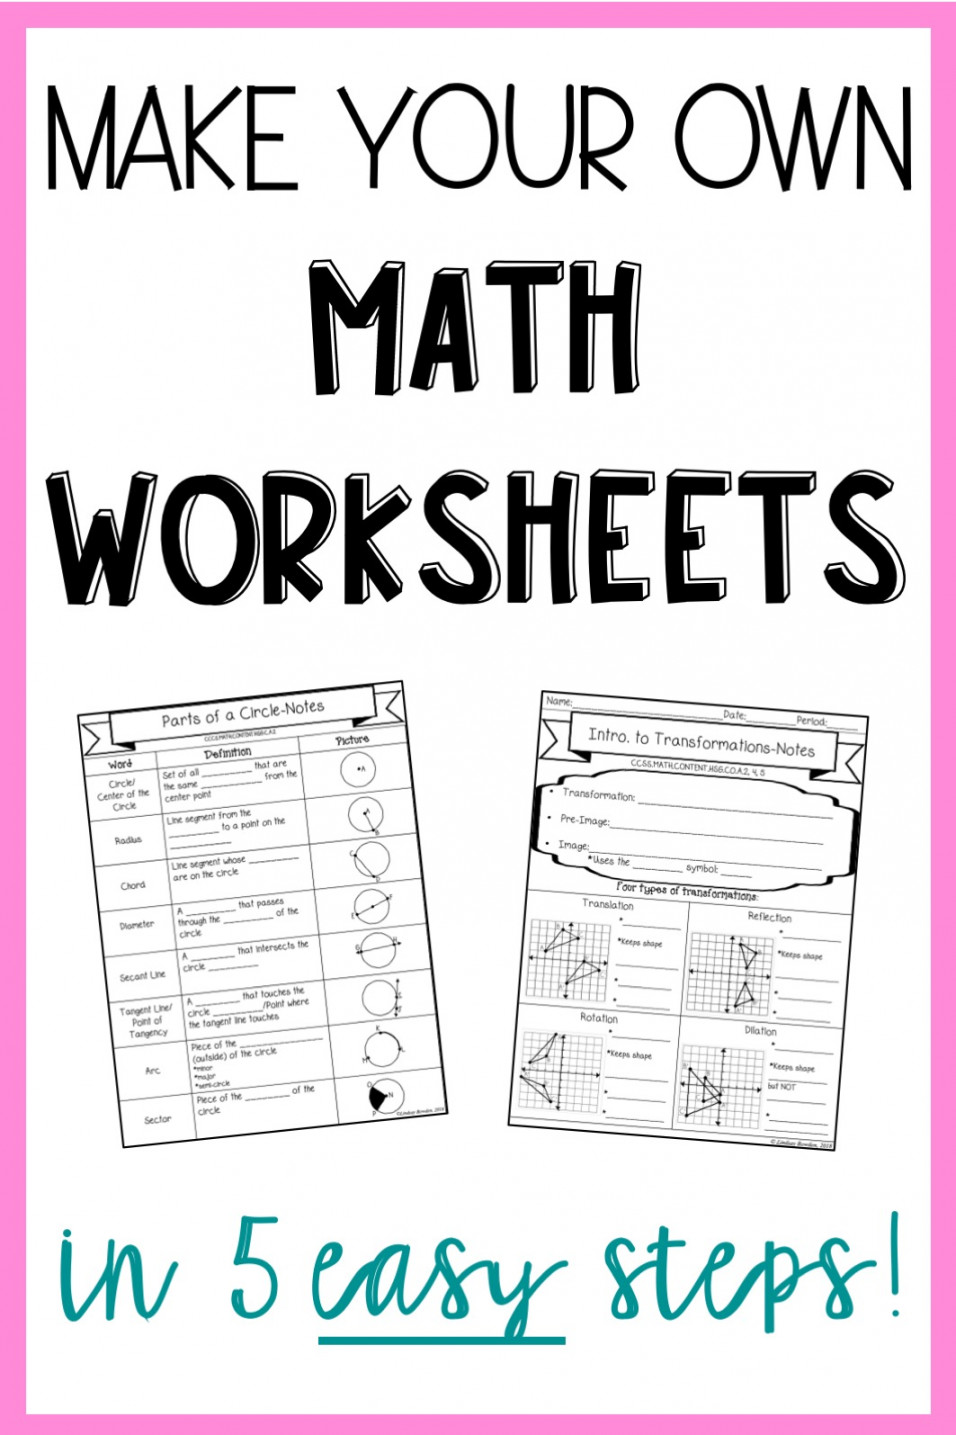 Make Your Own Math Worksheets in  Easy Steps - Lindsay Bowden